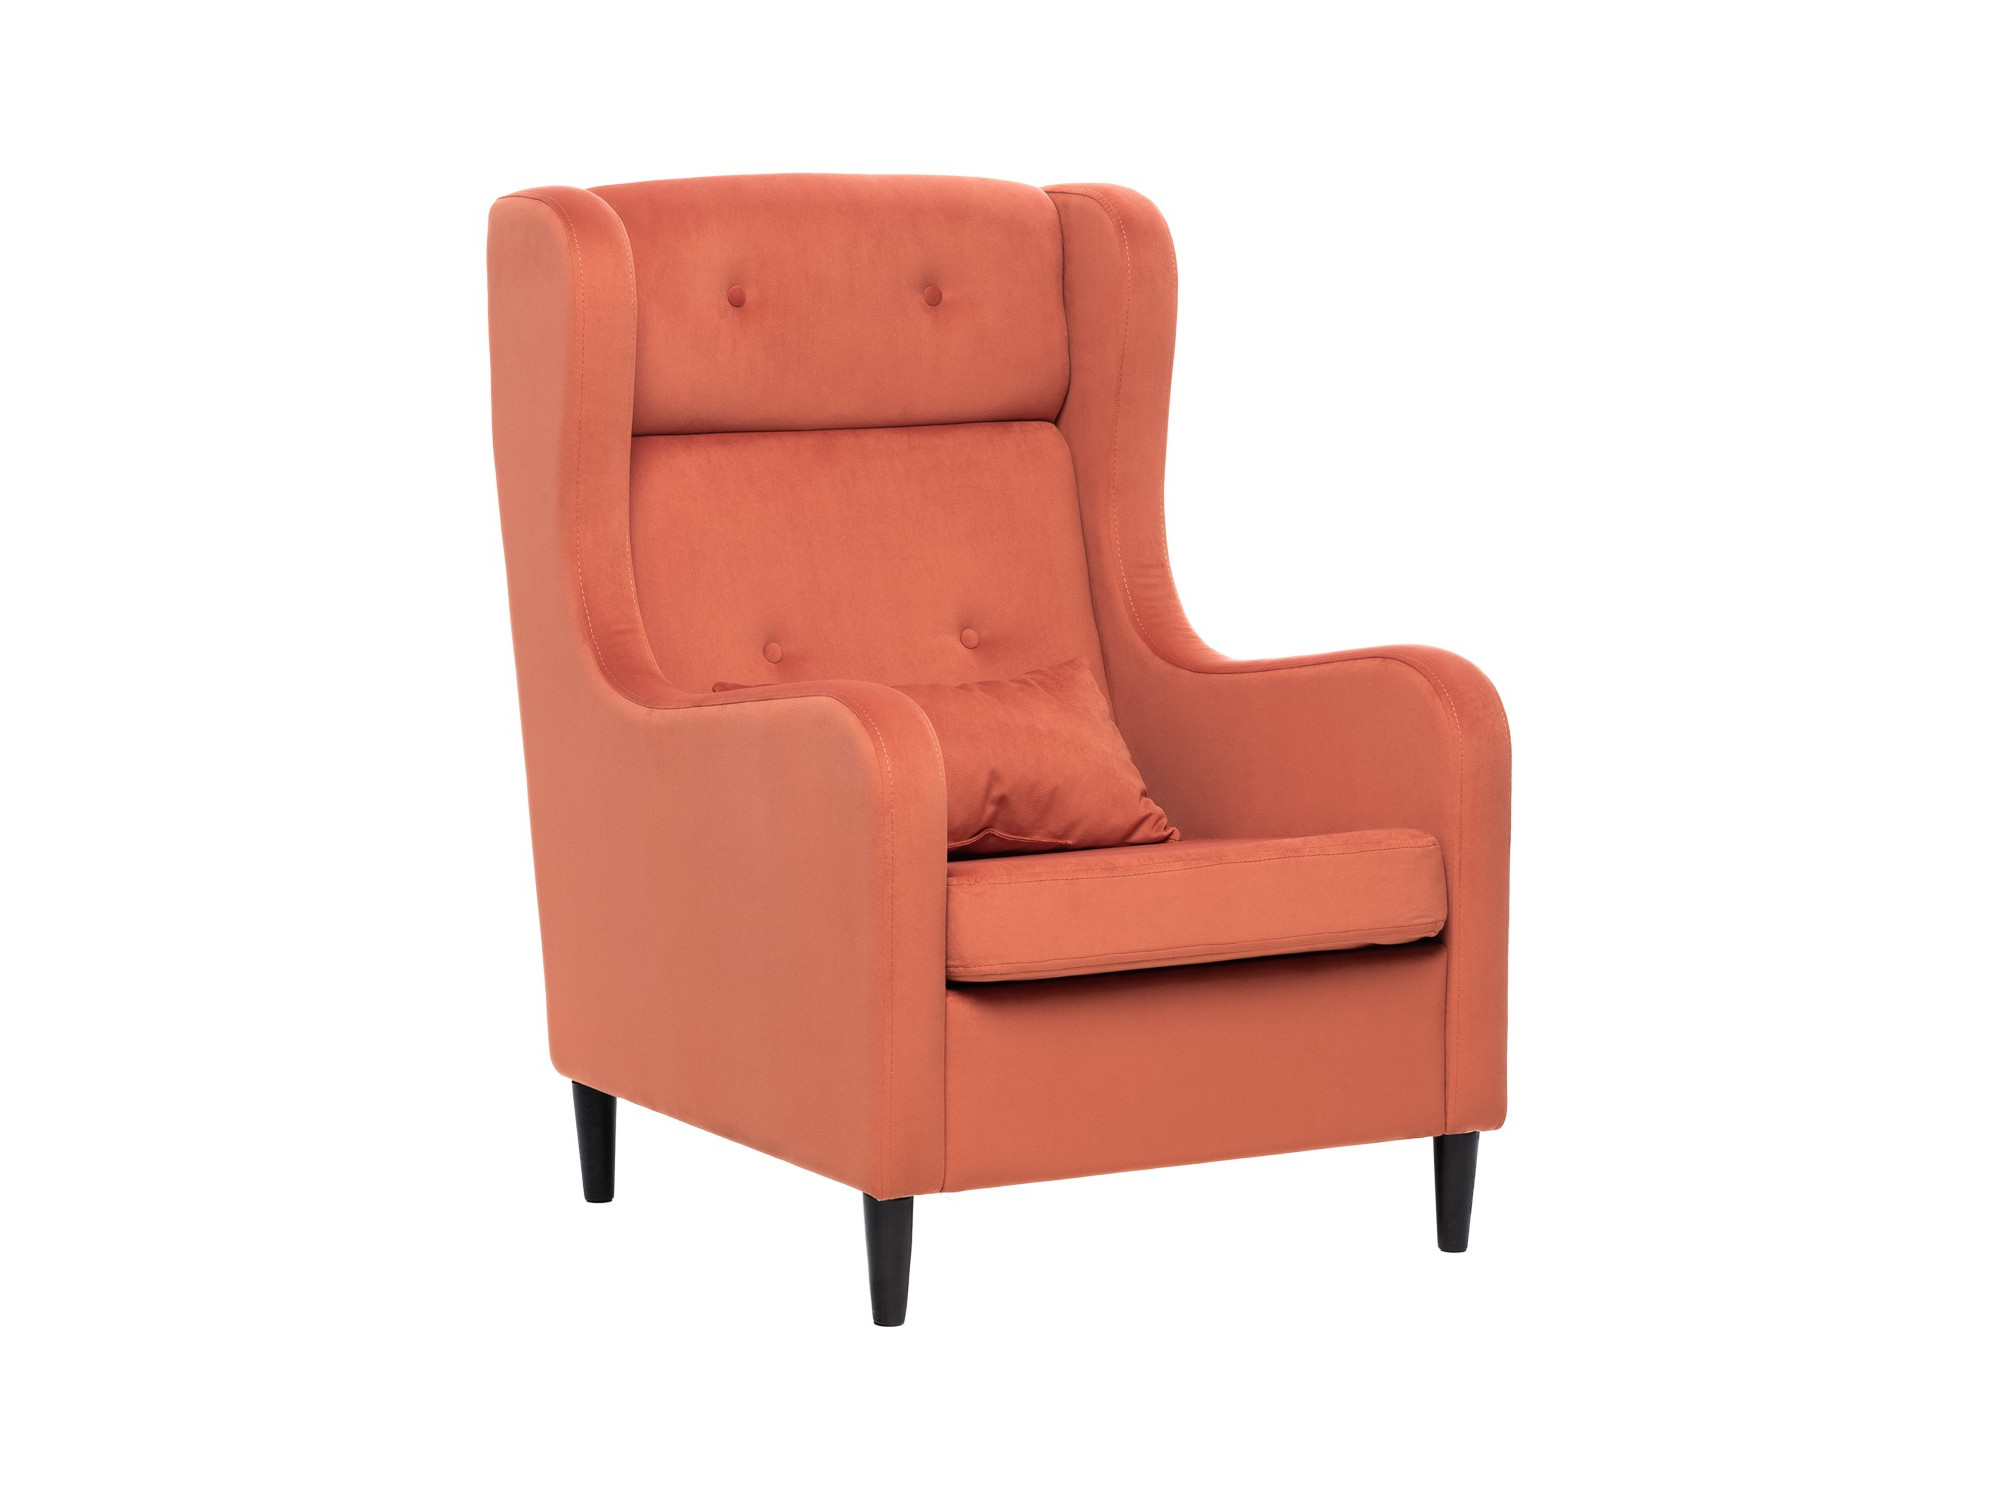 Кресло Leset Галант MebelVia V39 оранжевый, Ткань Велюр, Берёзовая фанера кресло качалка leset морено mebelvia v39 оранжевый велюр фанера гибкая